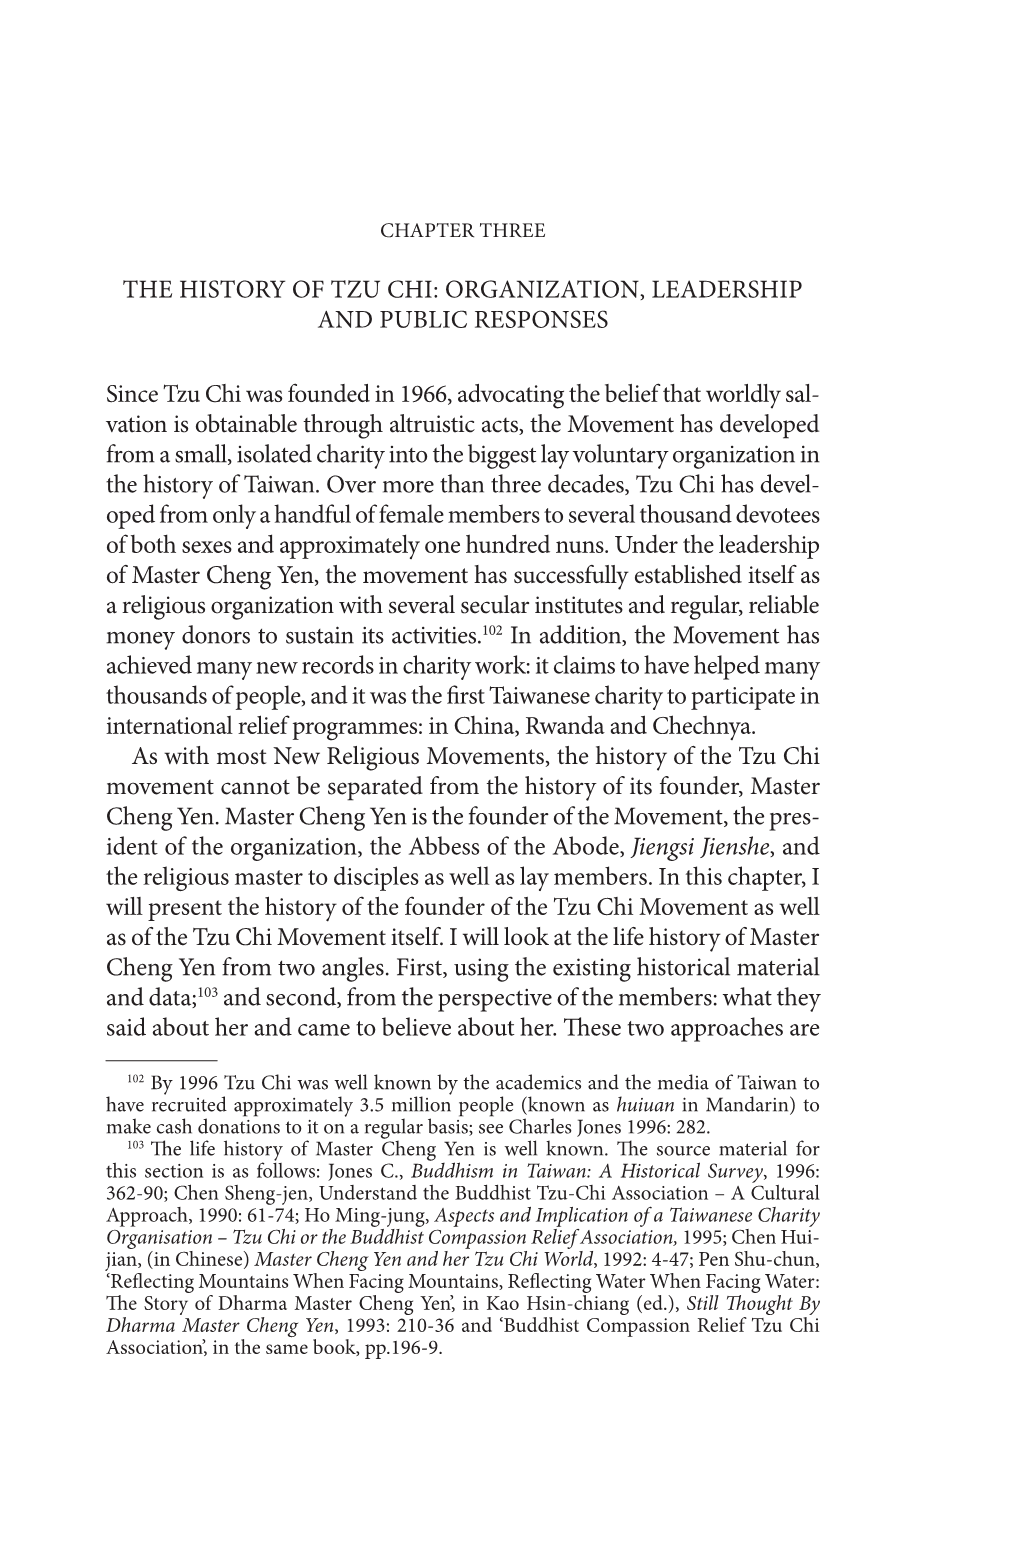 The History of Tzu Chi: Organization, Leadership and Public Responses